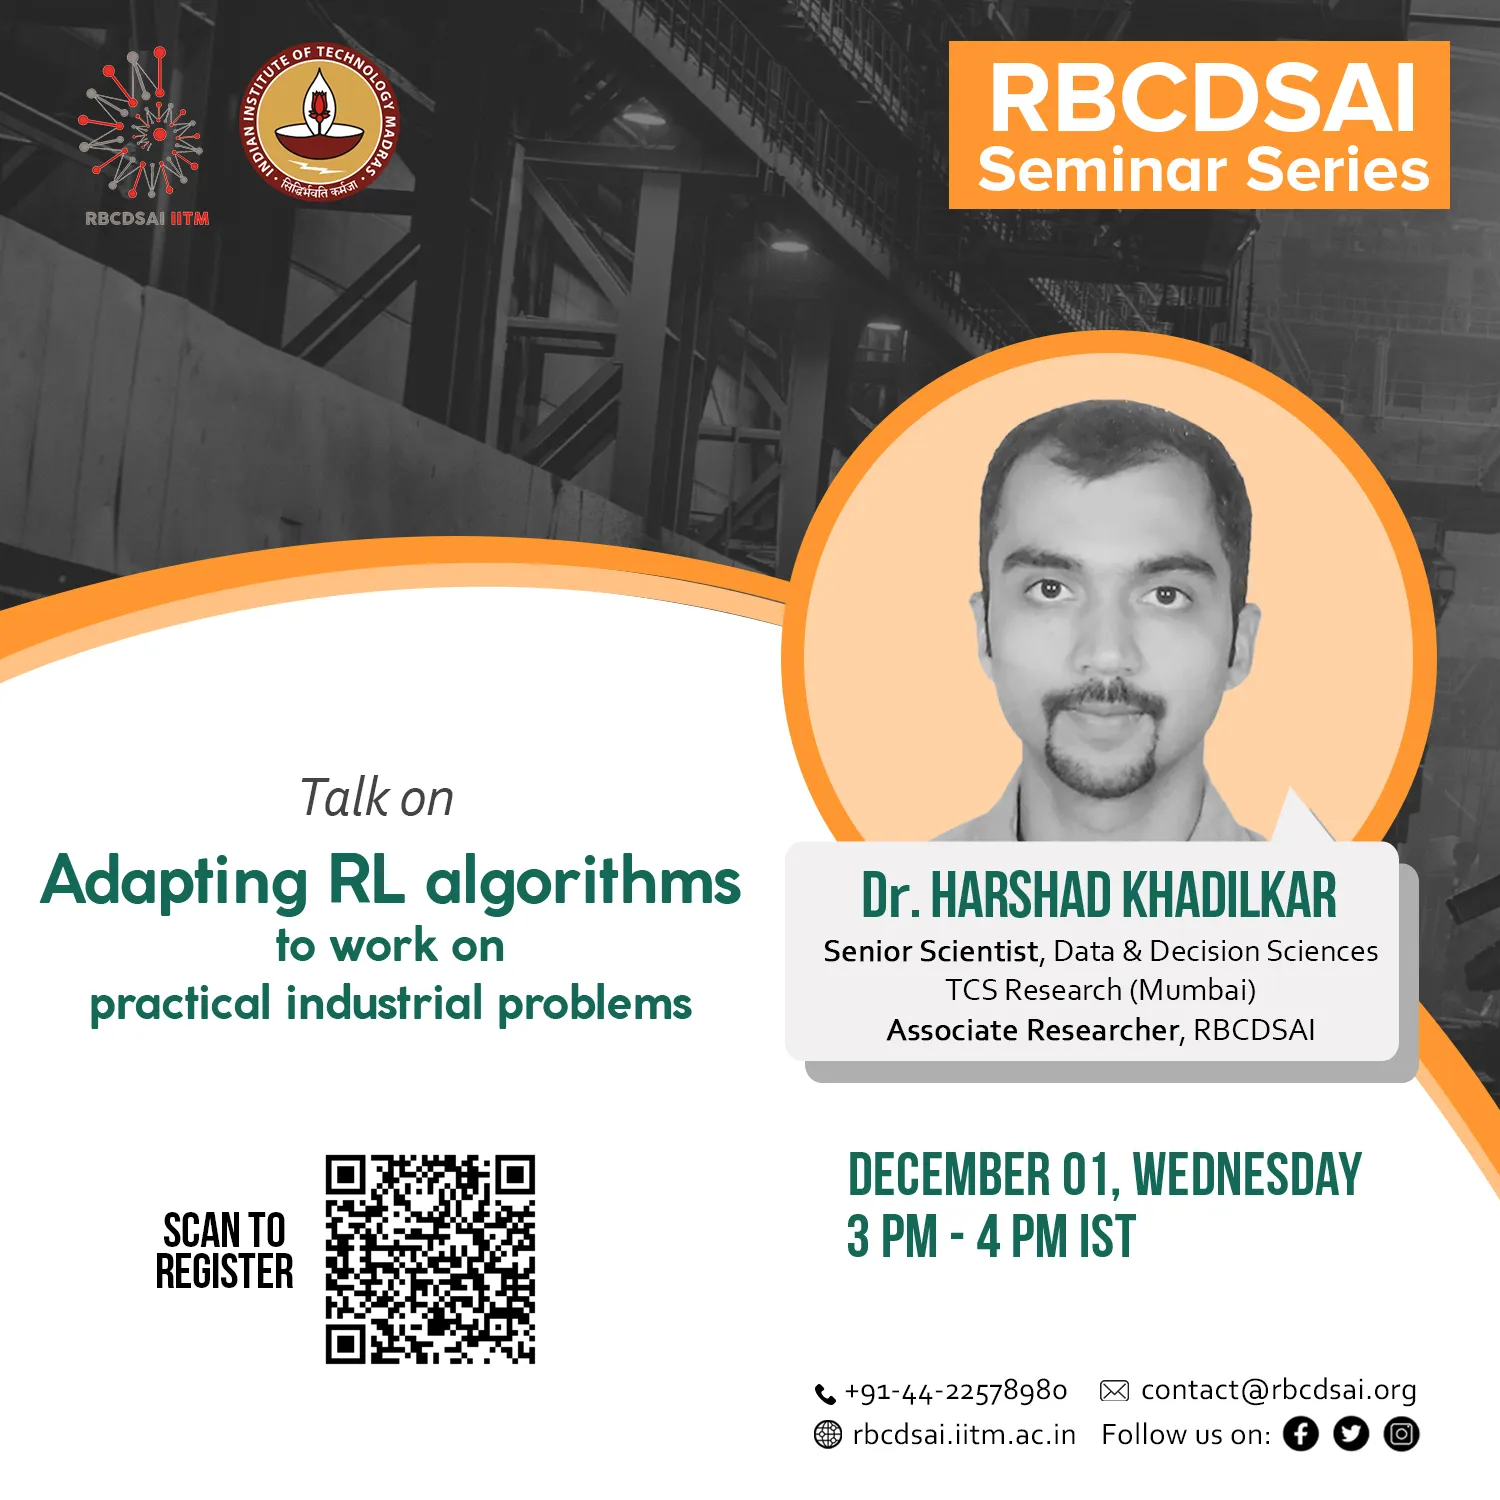 RBCDSAI Seminar - Adapting RL Algorithms by Dr. Harshad Khadilkar